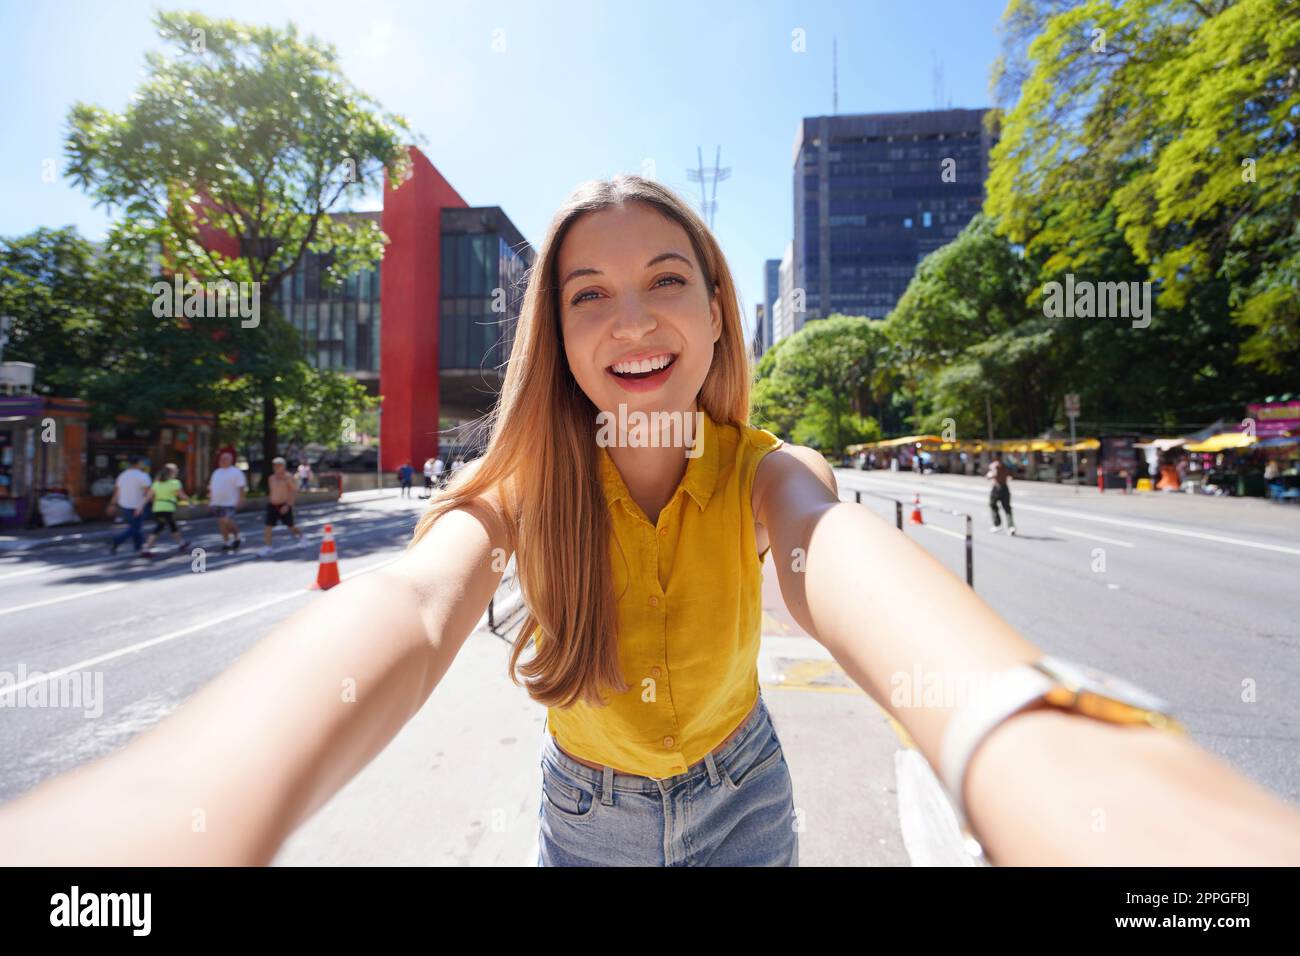 Tourism in Sao Paulo. Beautiful smiling girl takes self portrait on Paulista Avenue, Sao Paulo, Brazil. Stock Photo